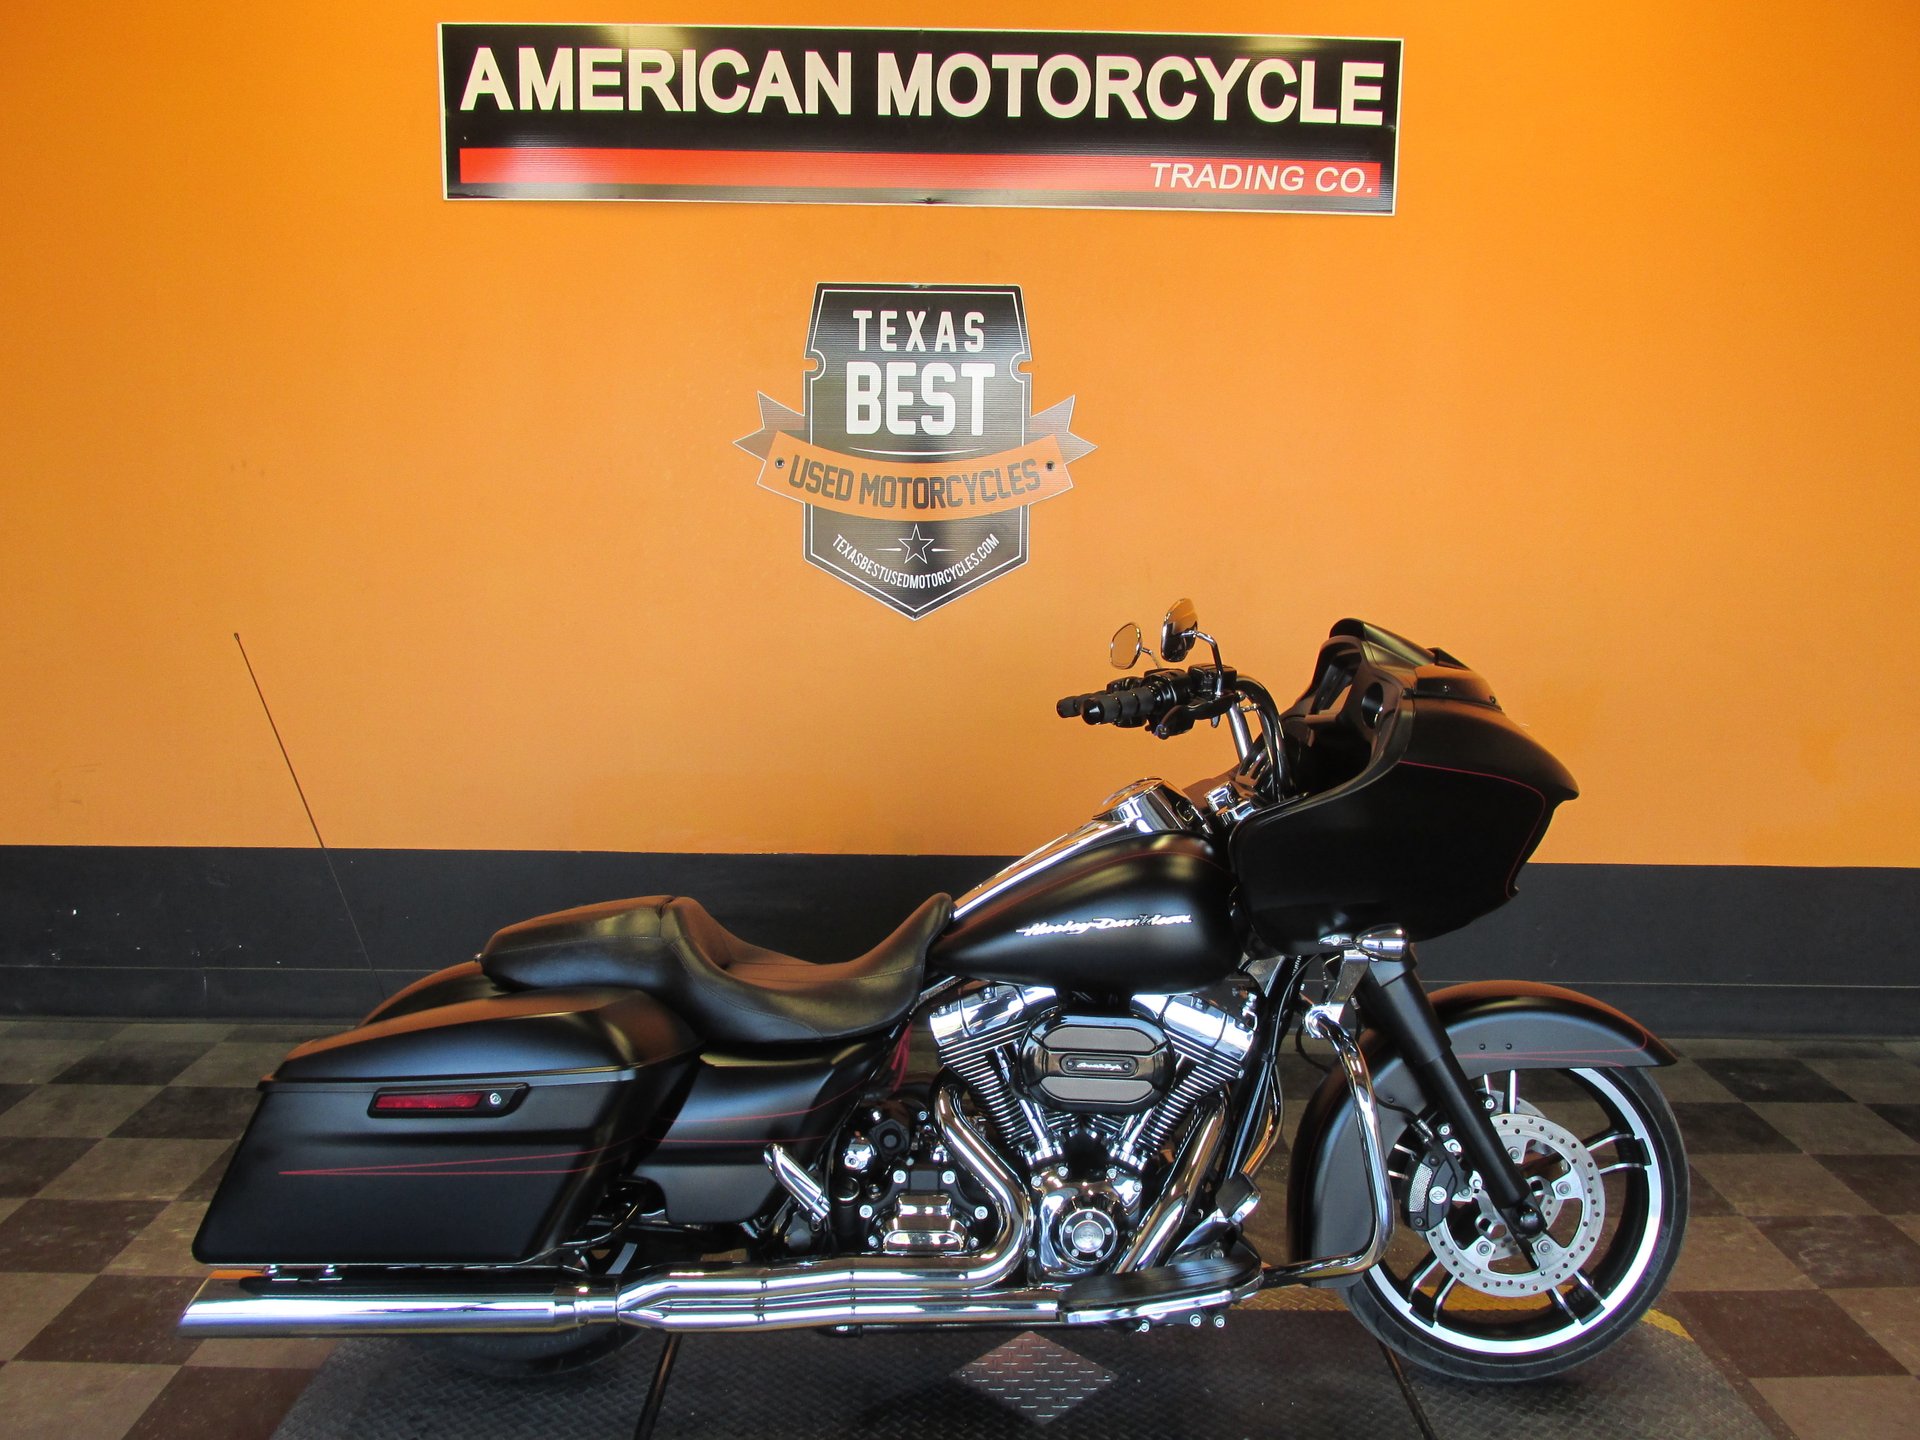 2015 Harley-Davidson Road Glide | American Motorcycle Trading Company -  Used Harley Davidson Motorcycles